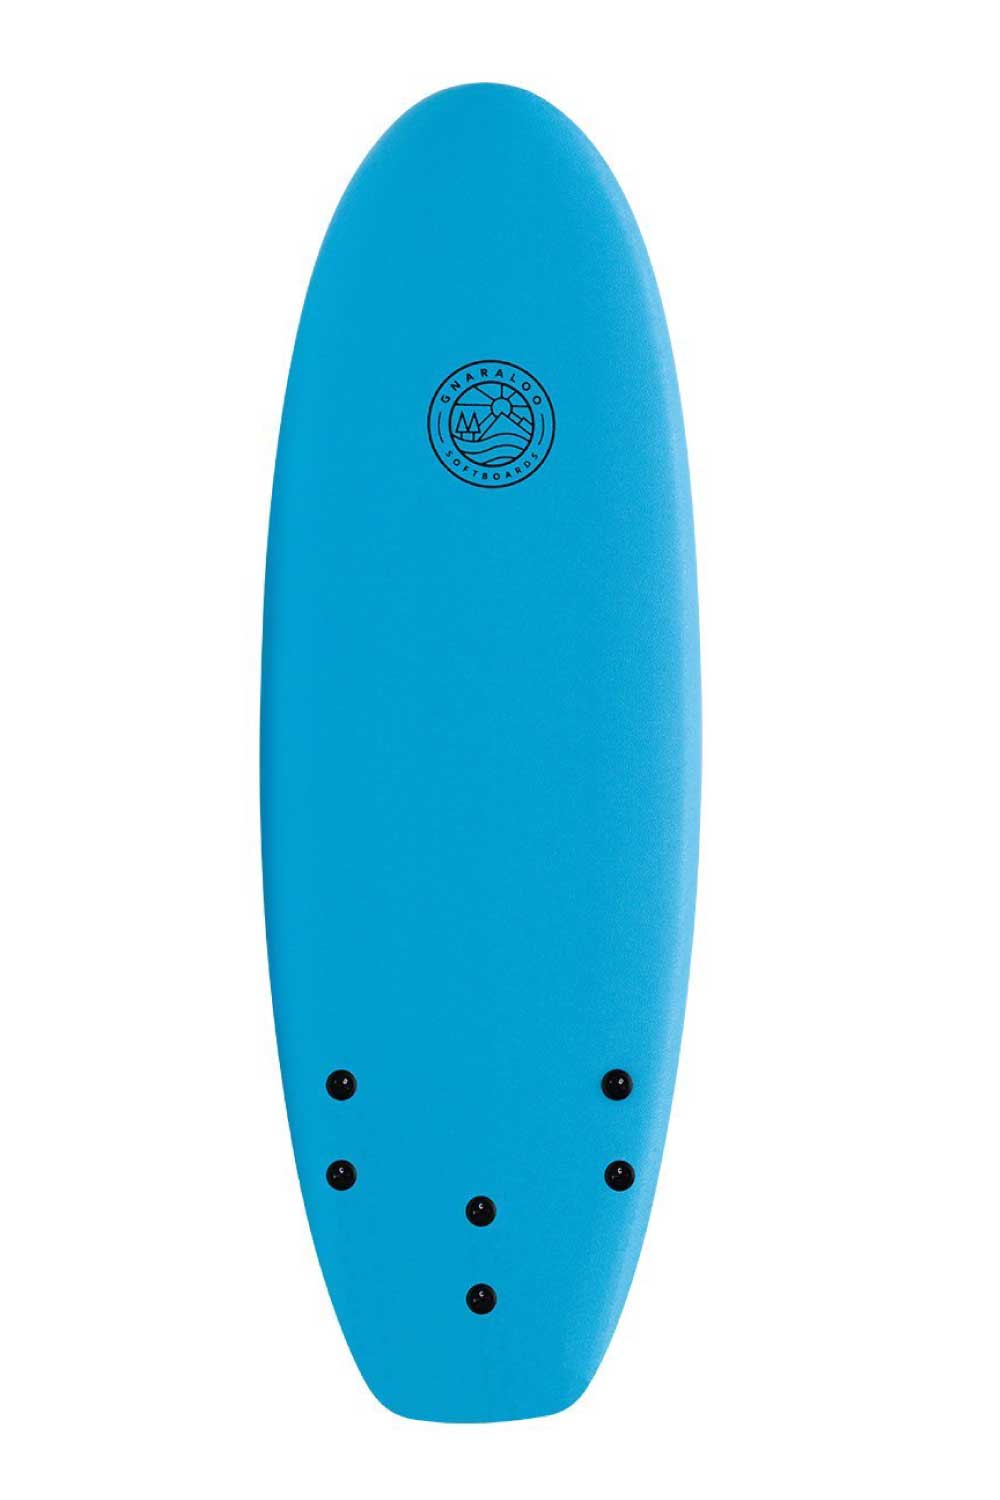 Gnaraloo Dune Buggy 4'10ft Softboard blue